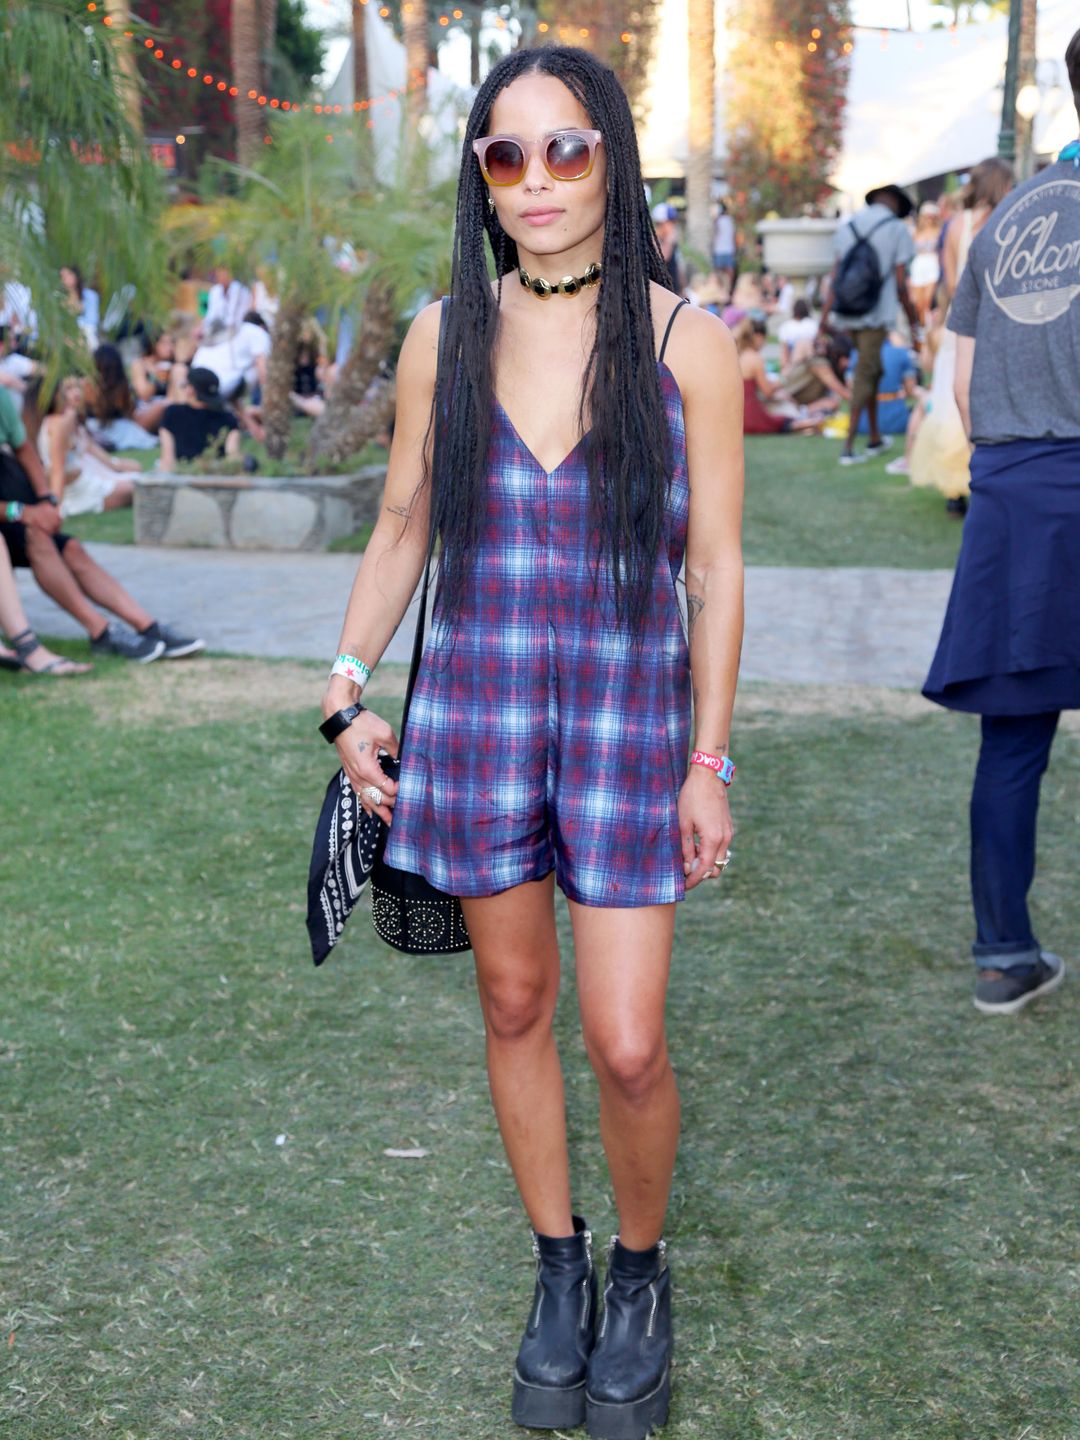 Zoe Kravitz attends Coachella wearing Marc by Marc Jacobs sunglasses on April 11, 2015